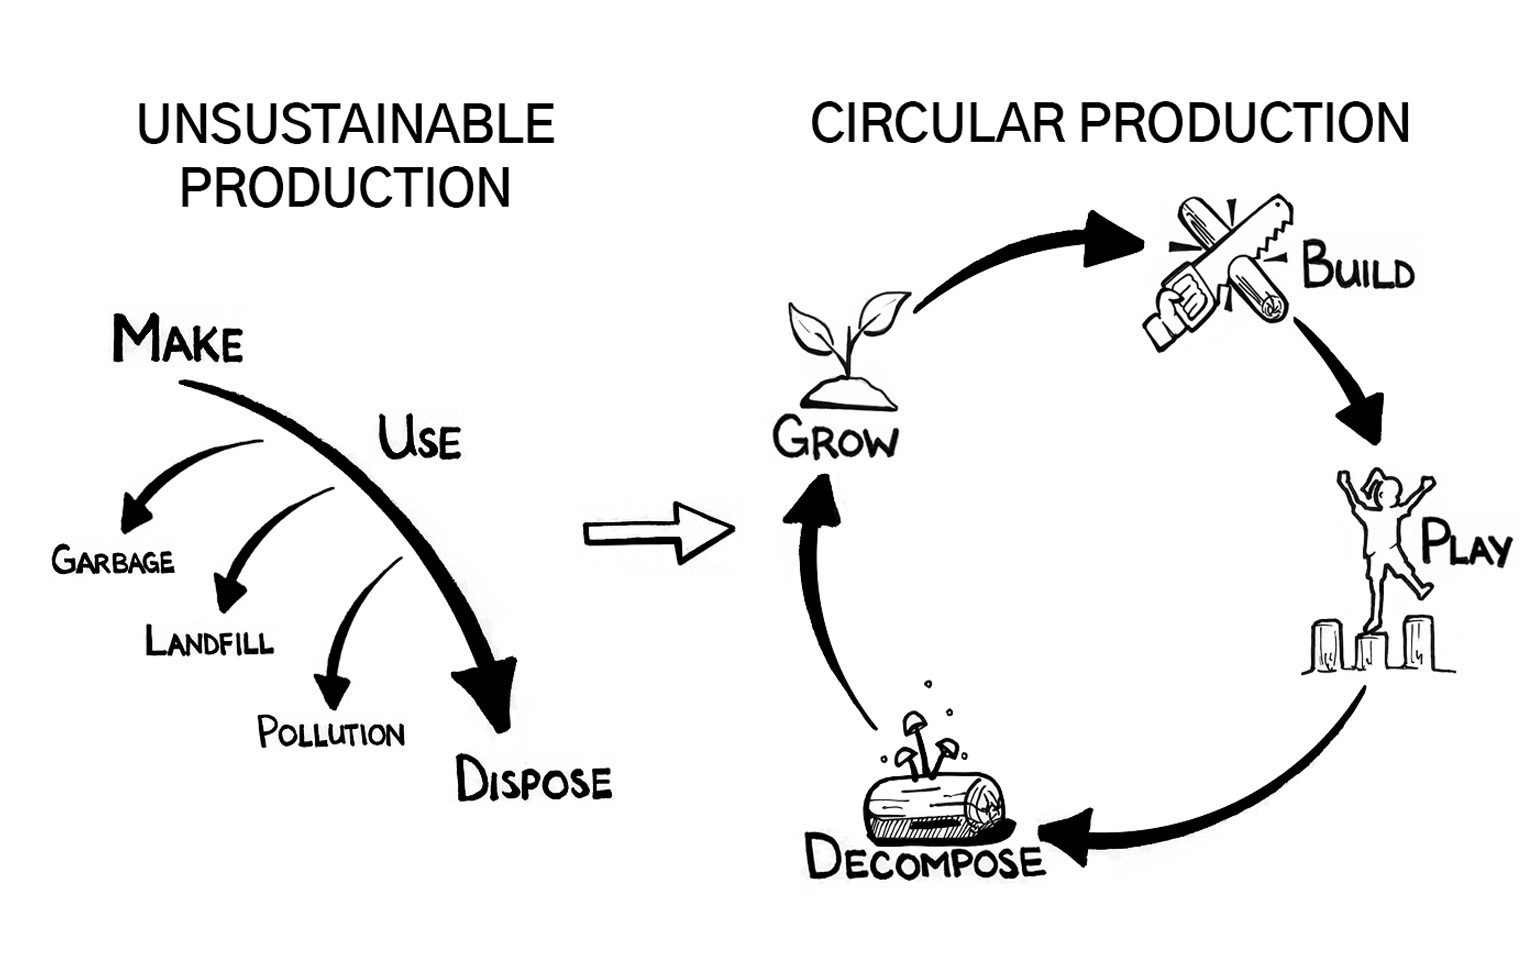 Unsustainable Production: Make, Use, Dispose, Pollute. Circular Production: Make, Use, Reuse, Remake, Recycle, Make